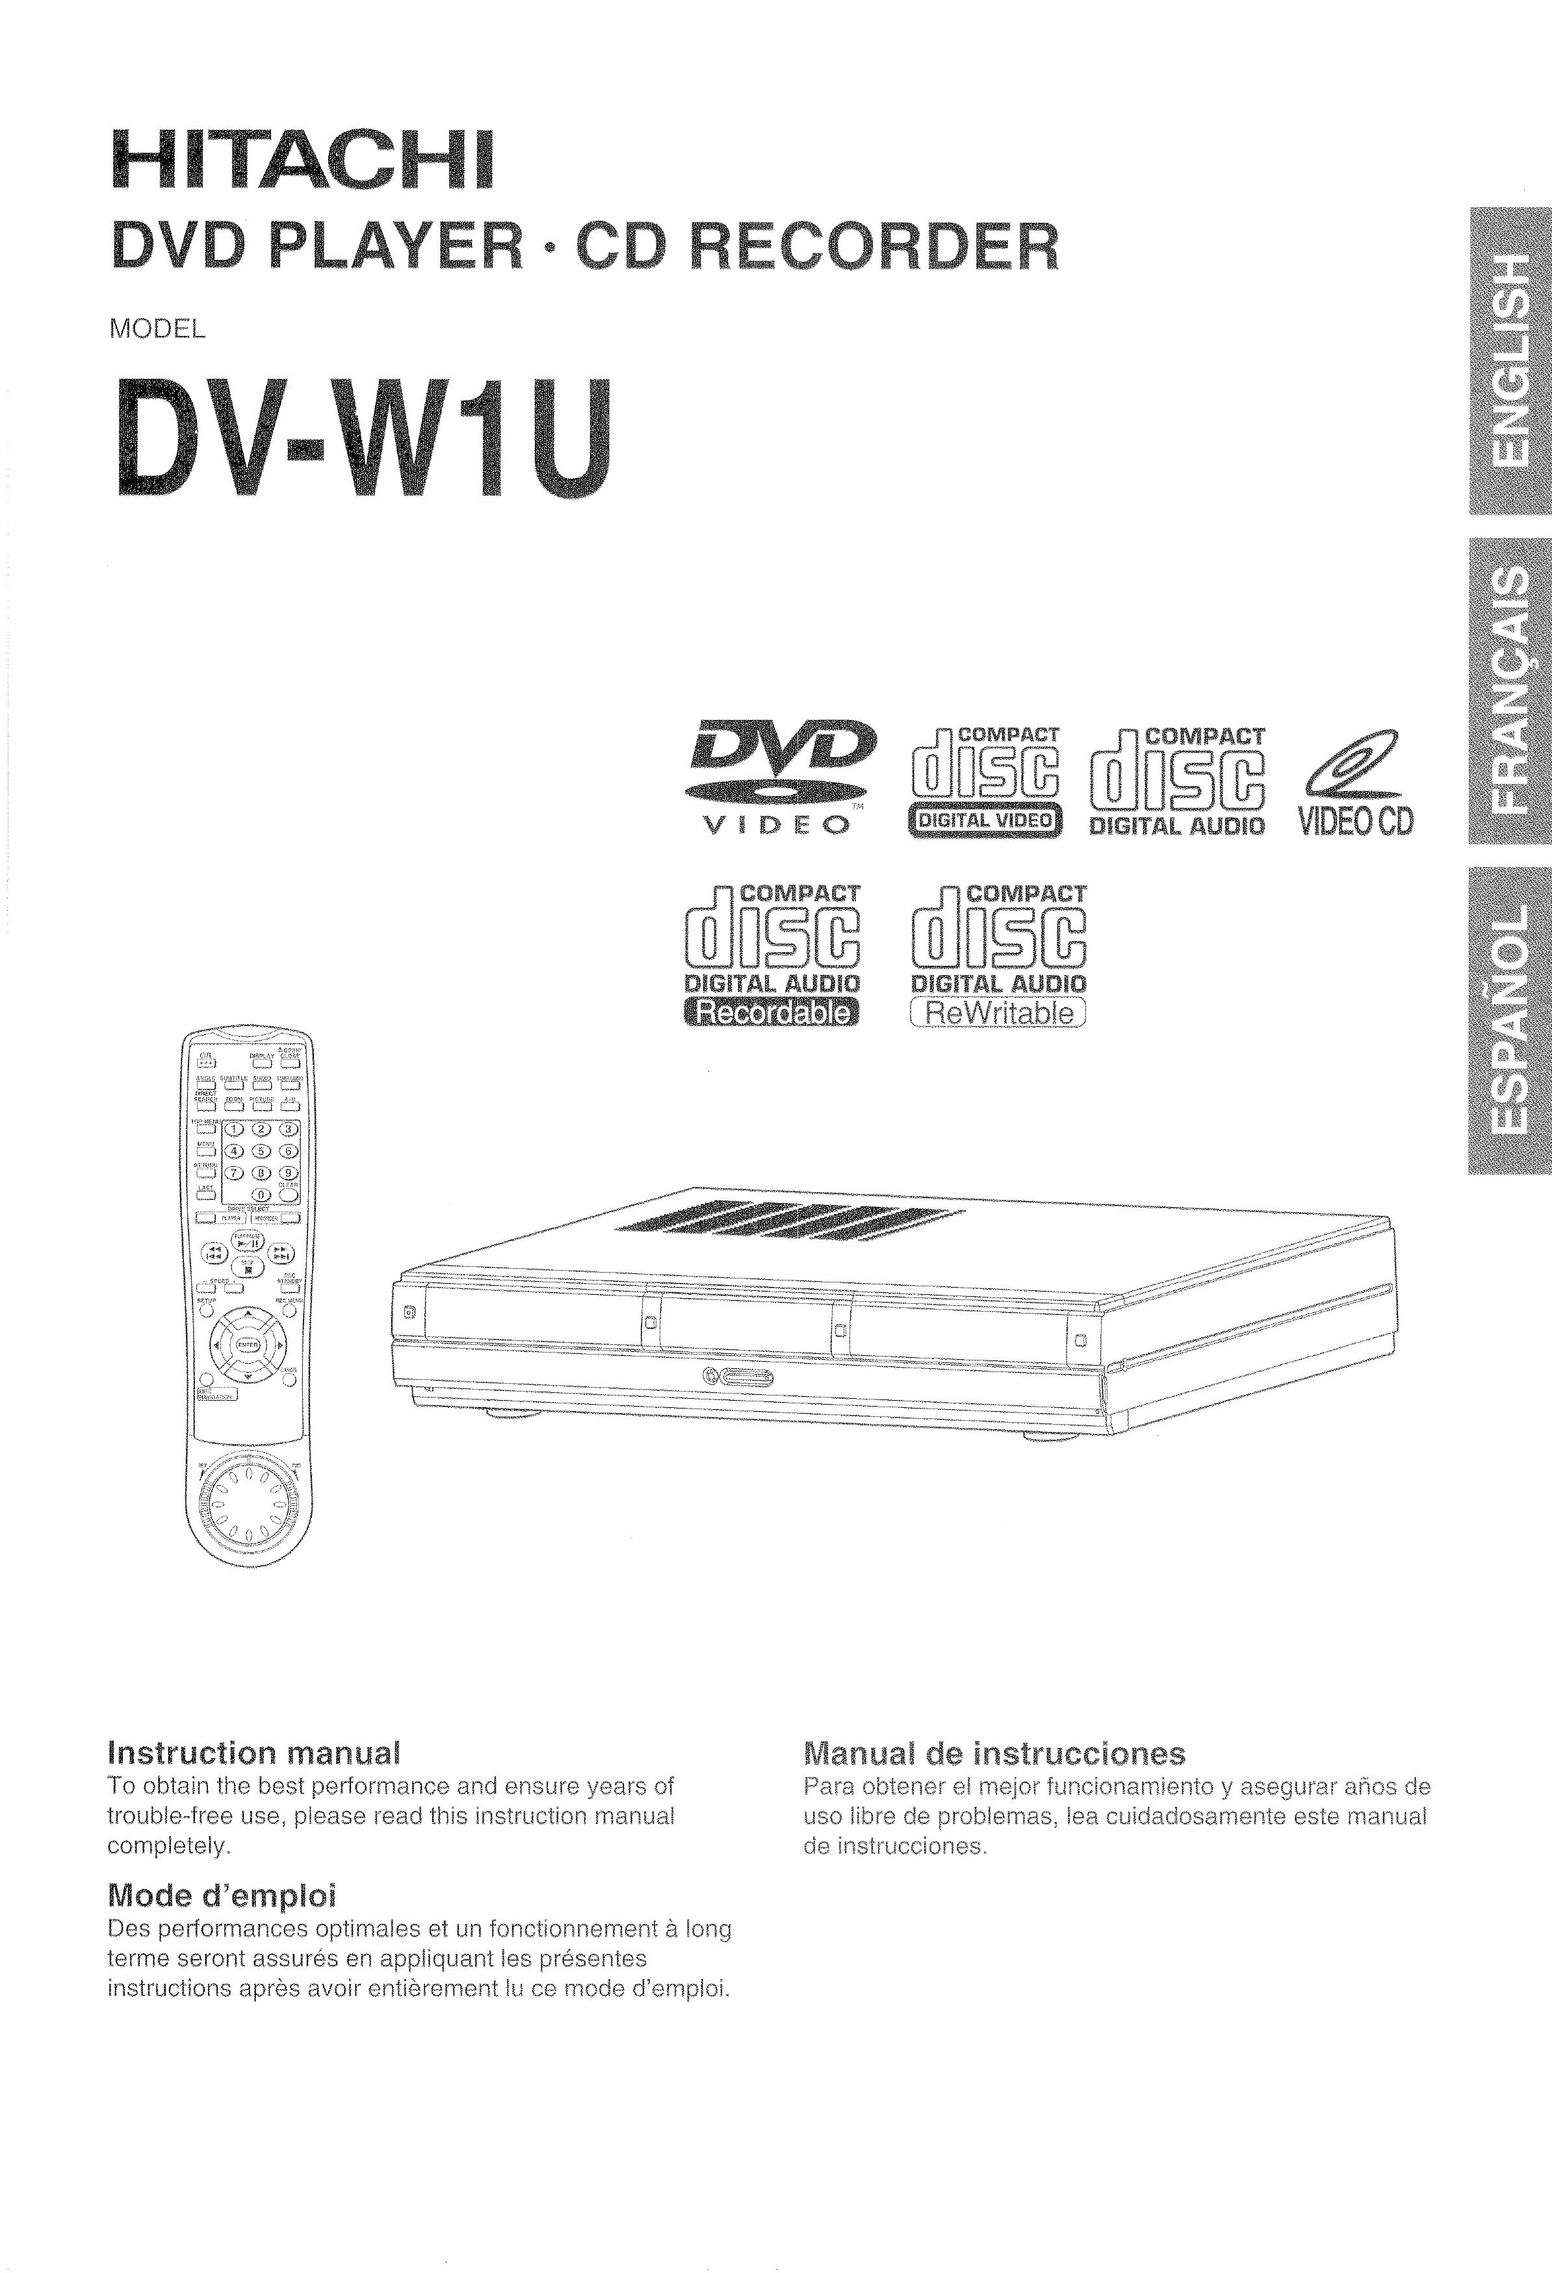 Hitachi DV-W1U DVD Recorder User Manual